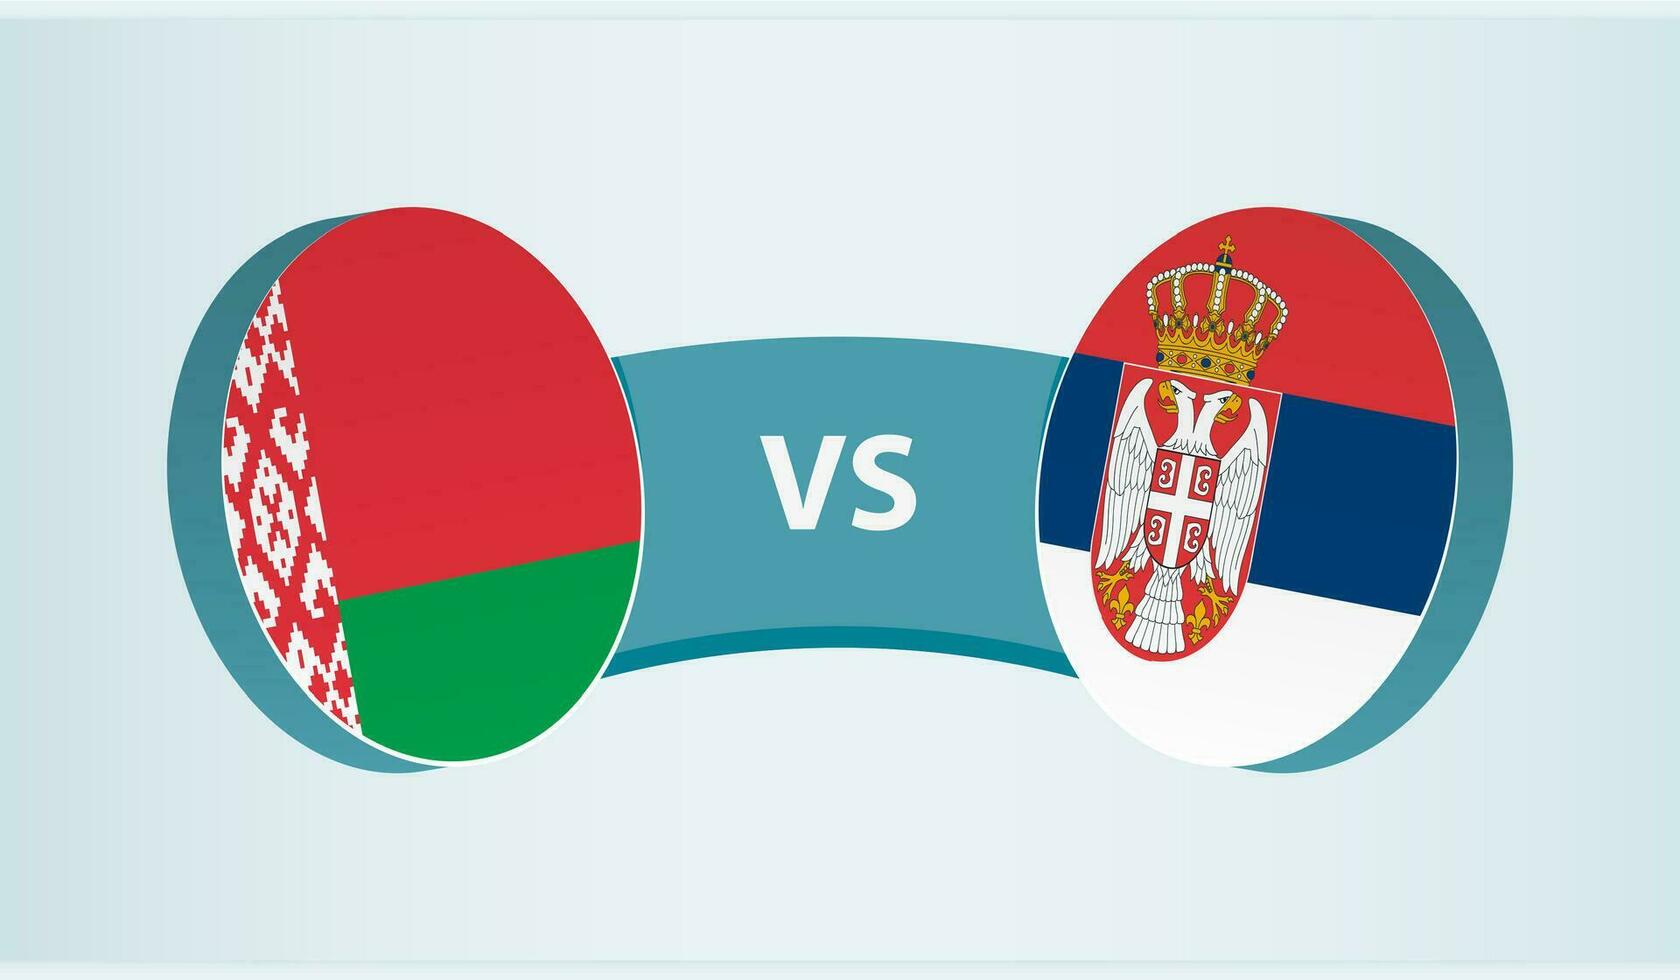 Belarus versus Serbia, team sports competition concept. vector